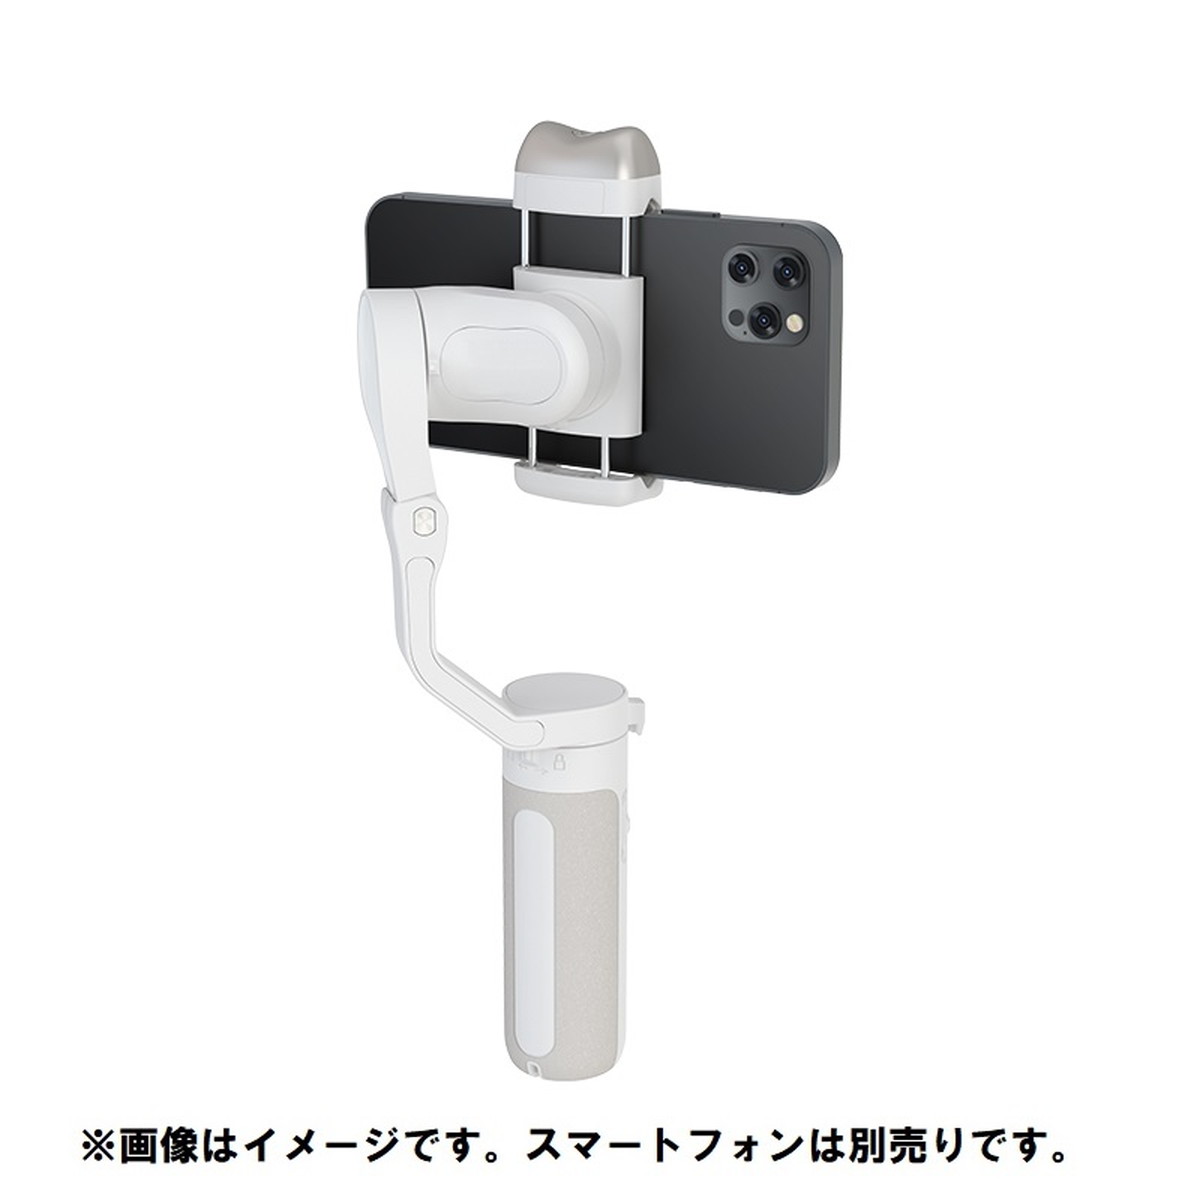 ■iSteady V2 White スマートフォン用３軸ジンバル AIカメラ搭載